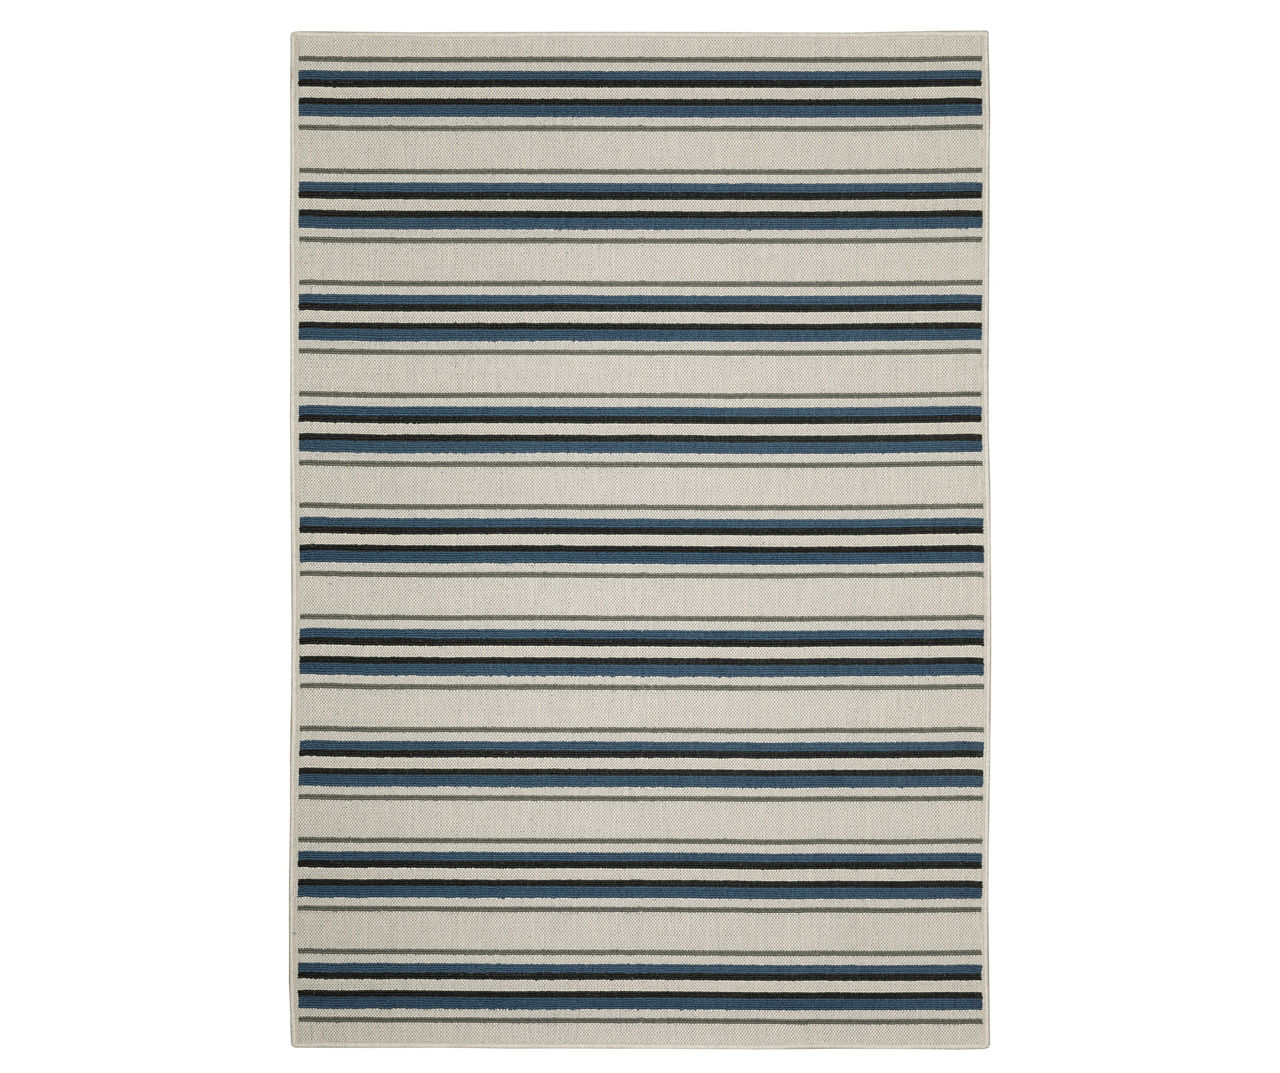 Torie Beige & Blue Stripe Outdoor Area Rug, (1.1' x 7.3')